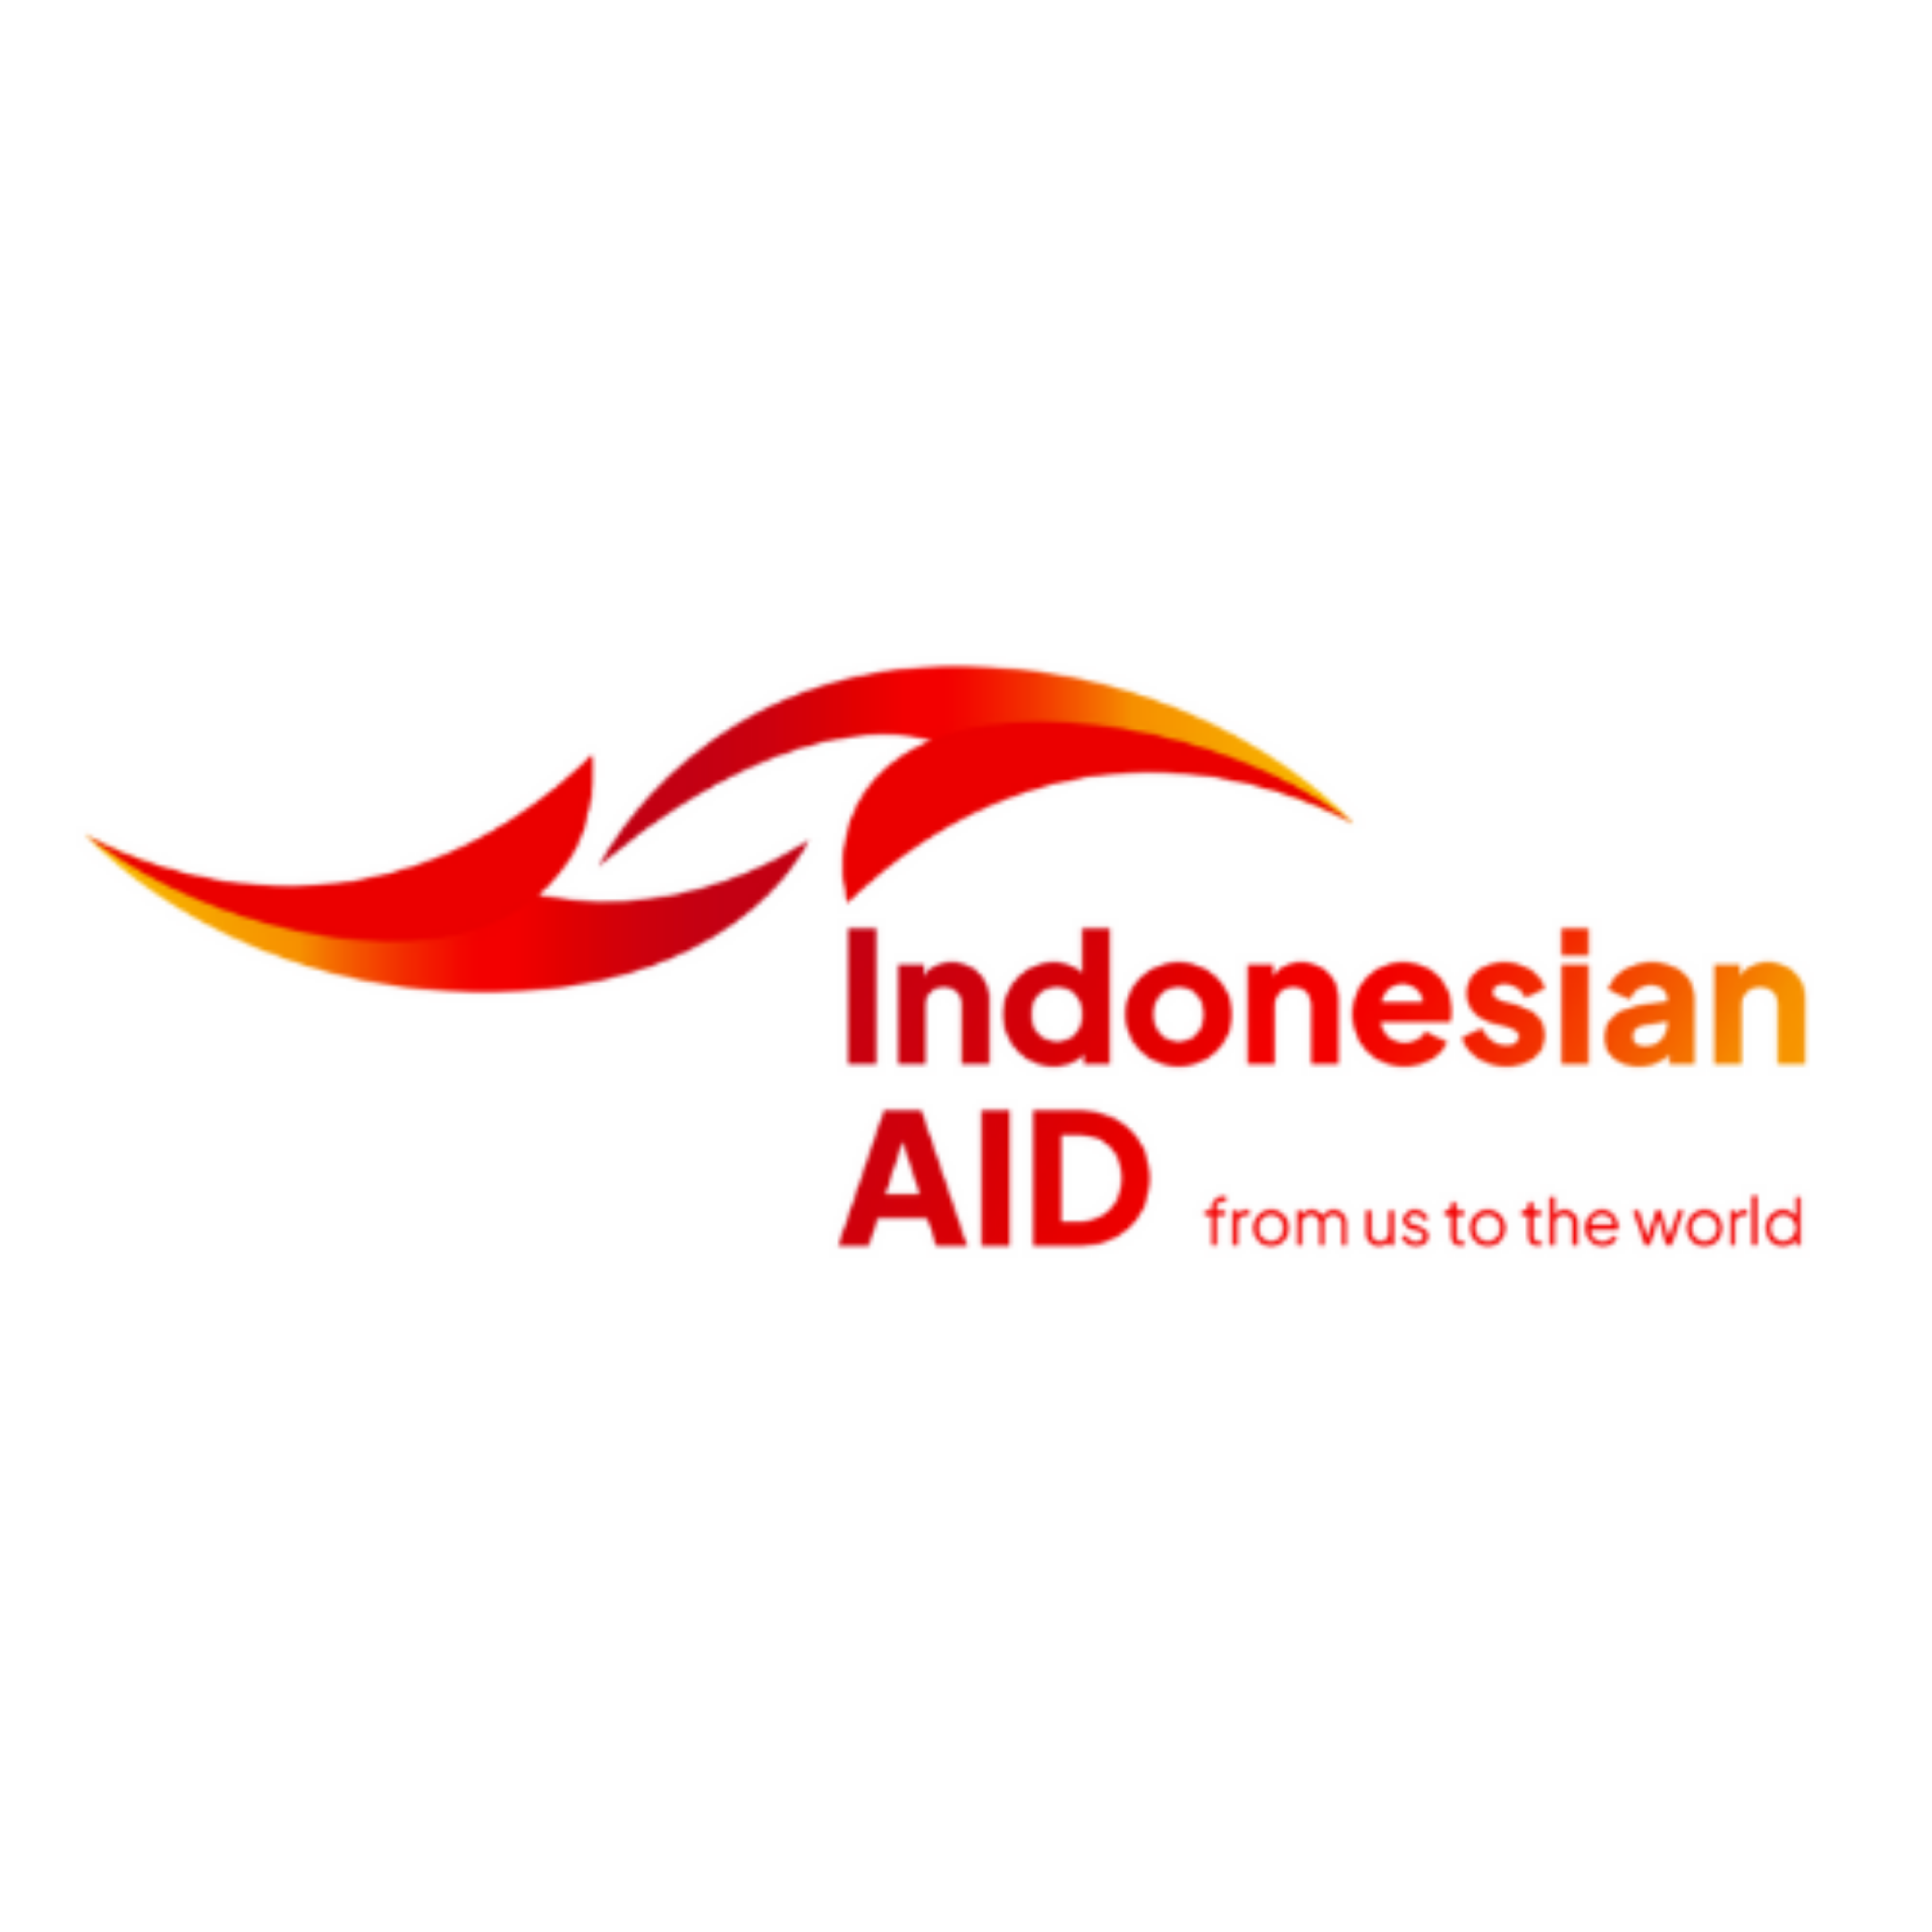 Indonesian Agency for International Development (Indonesian AID)